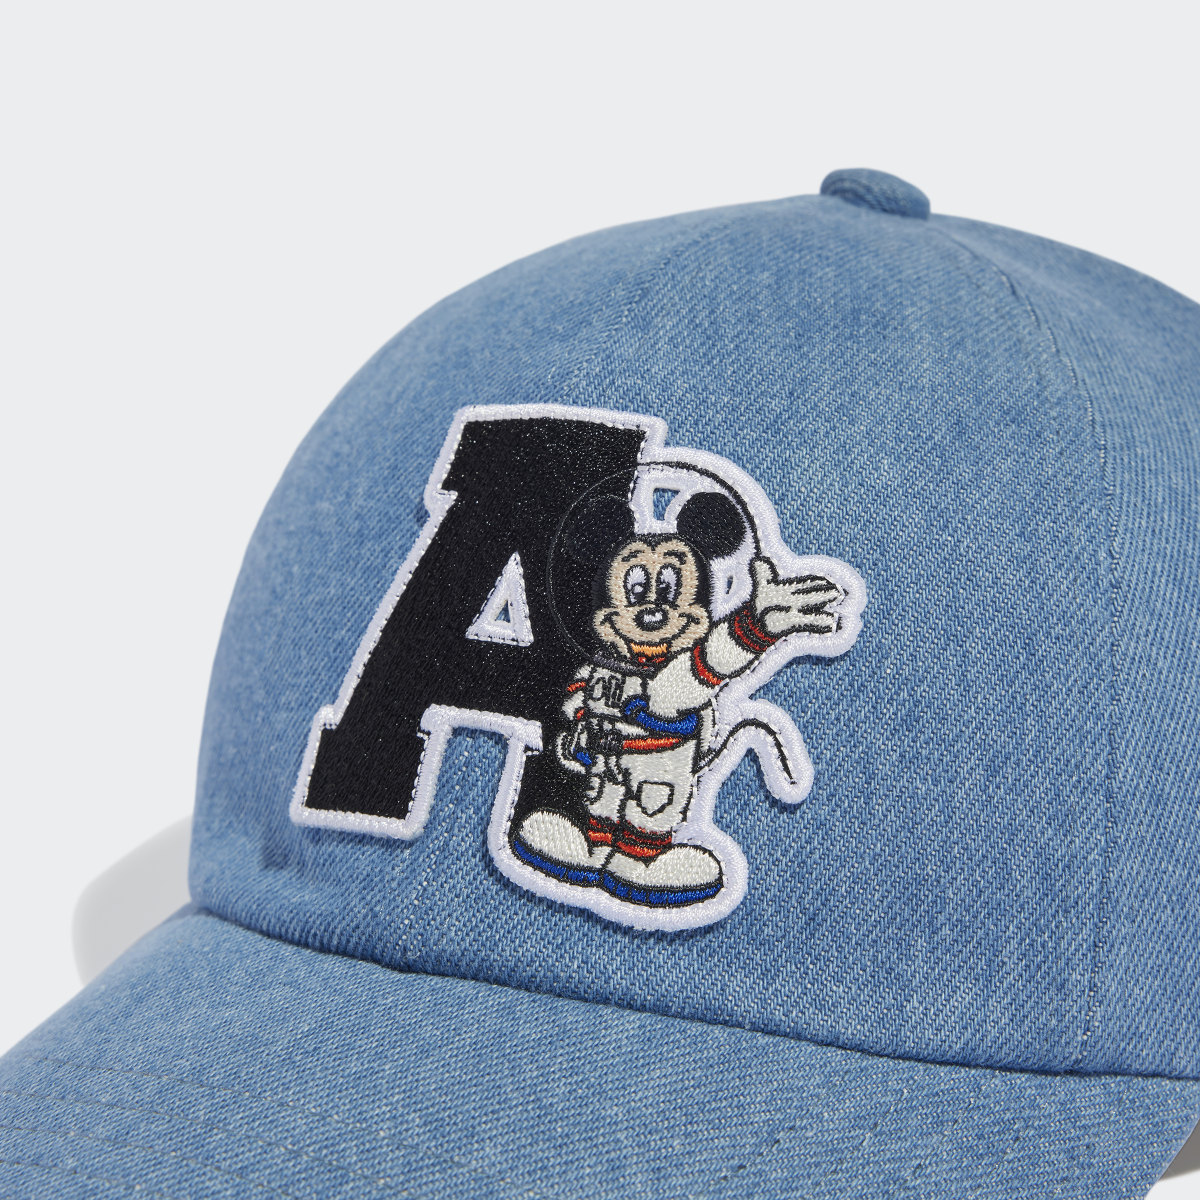 Adidas Baseball Hat. 4